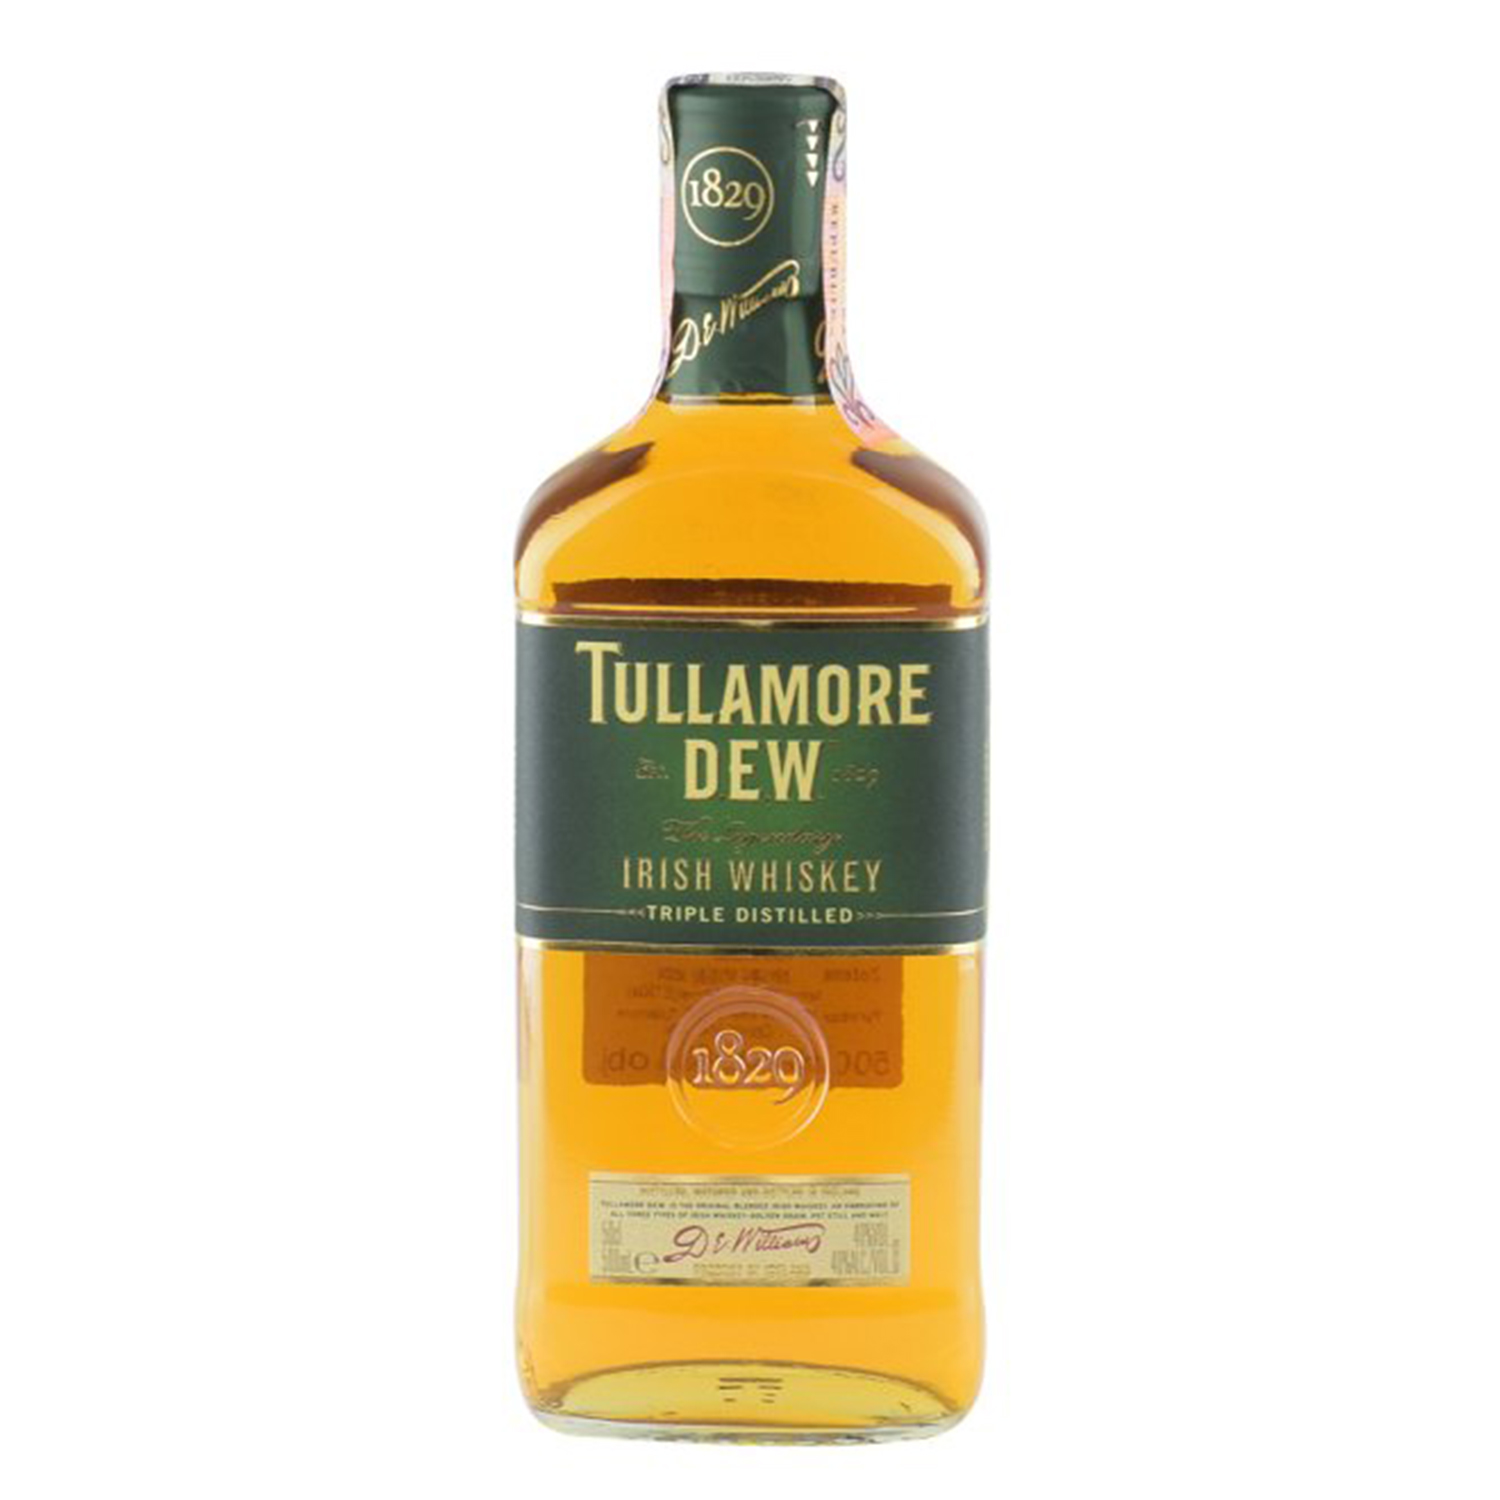 Tullamore D.E.W. Tullamore Dew 40% 0,5L